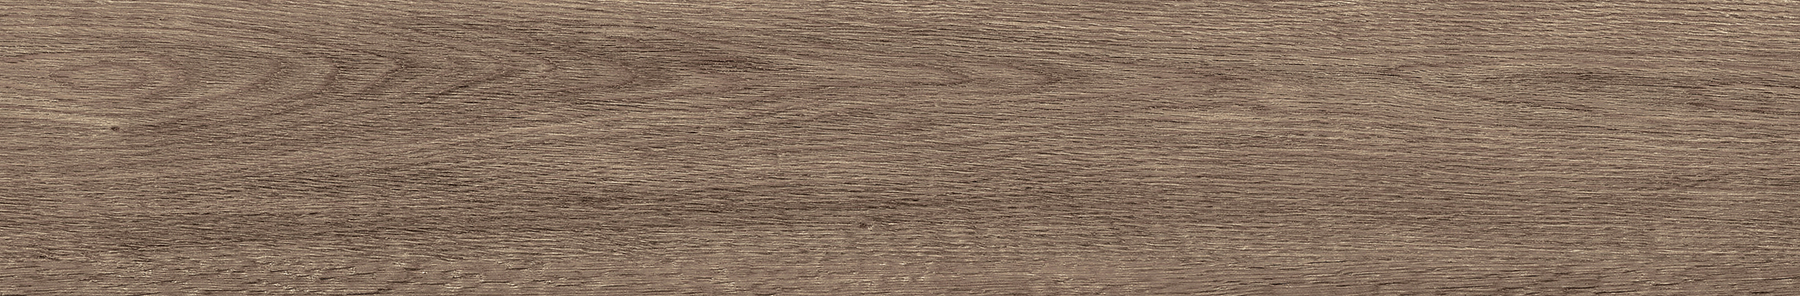 EW1065-15 川島織物セルコン 床タイル エグザウッド パスカルオーク 川島織物セルコン フロアタイル